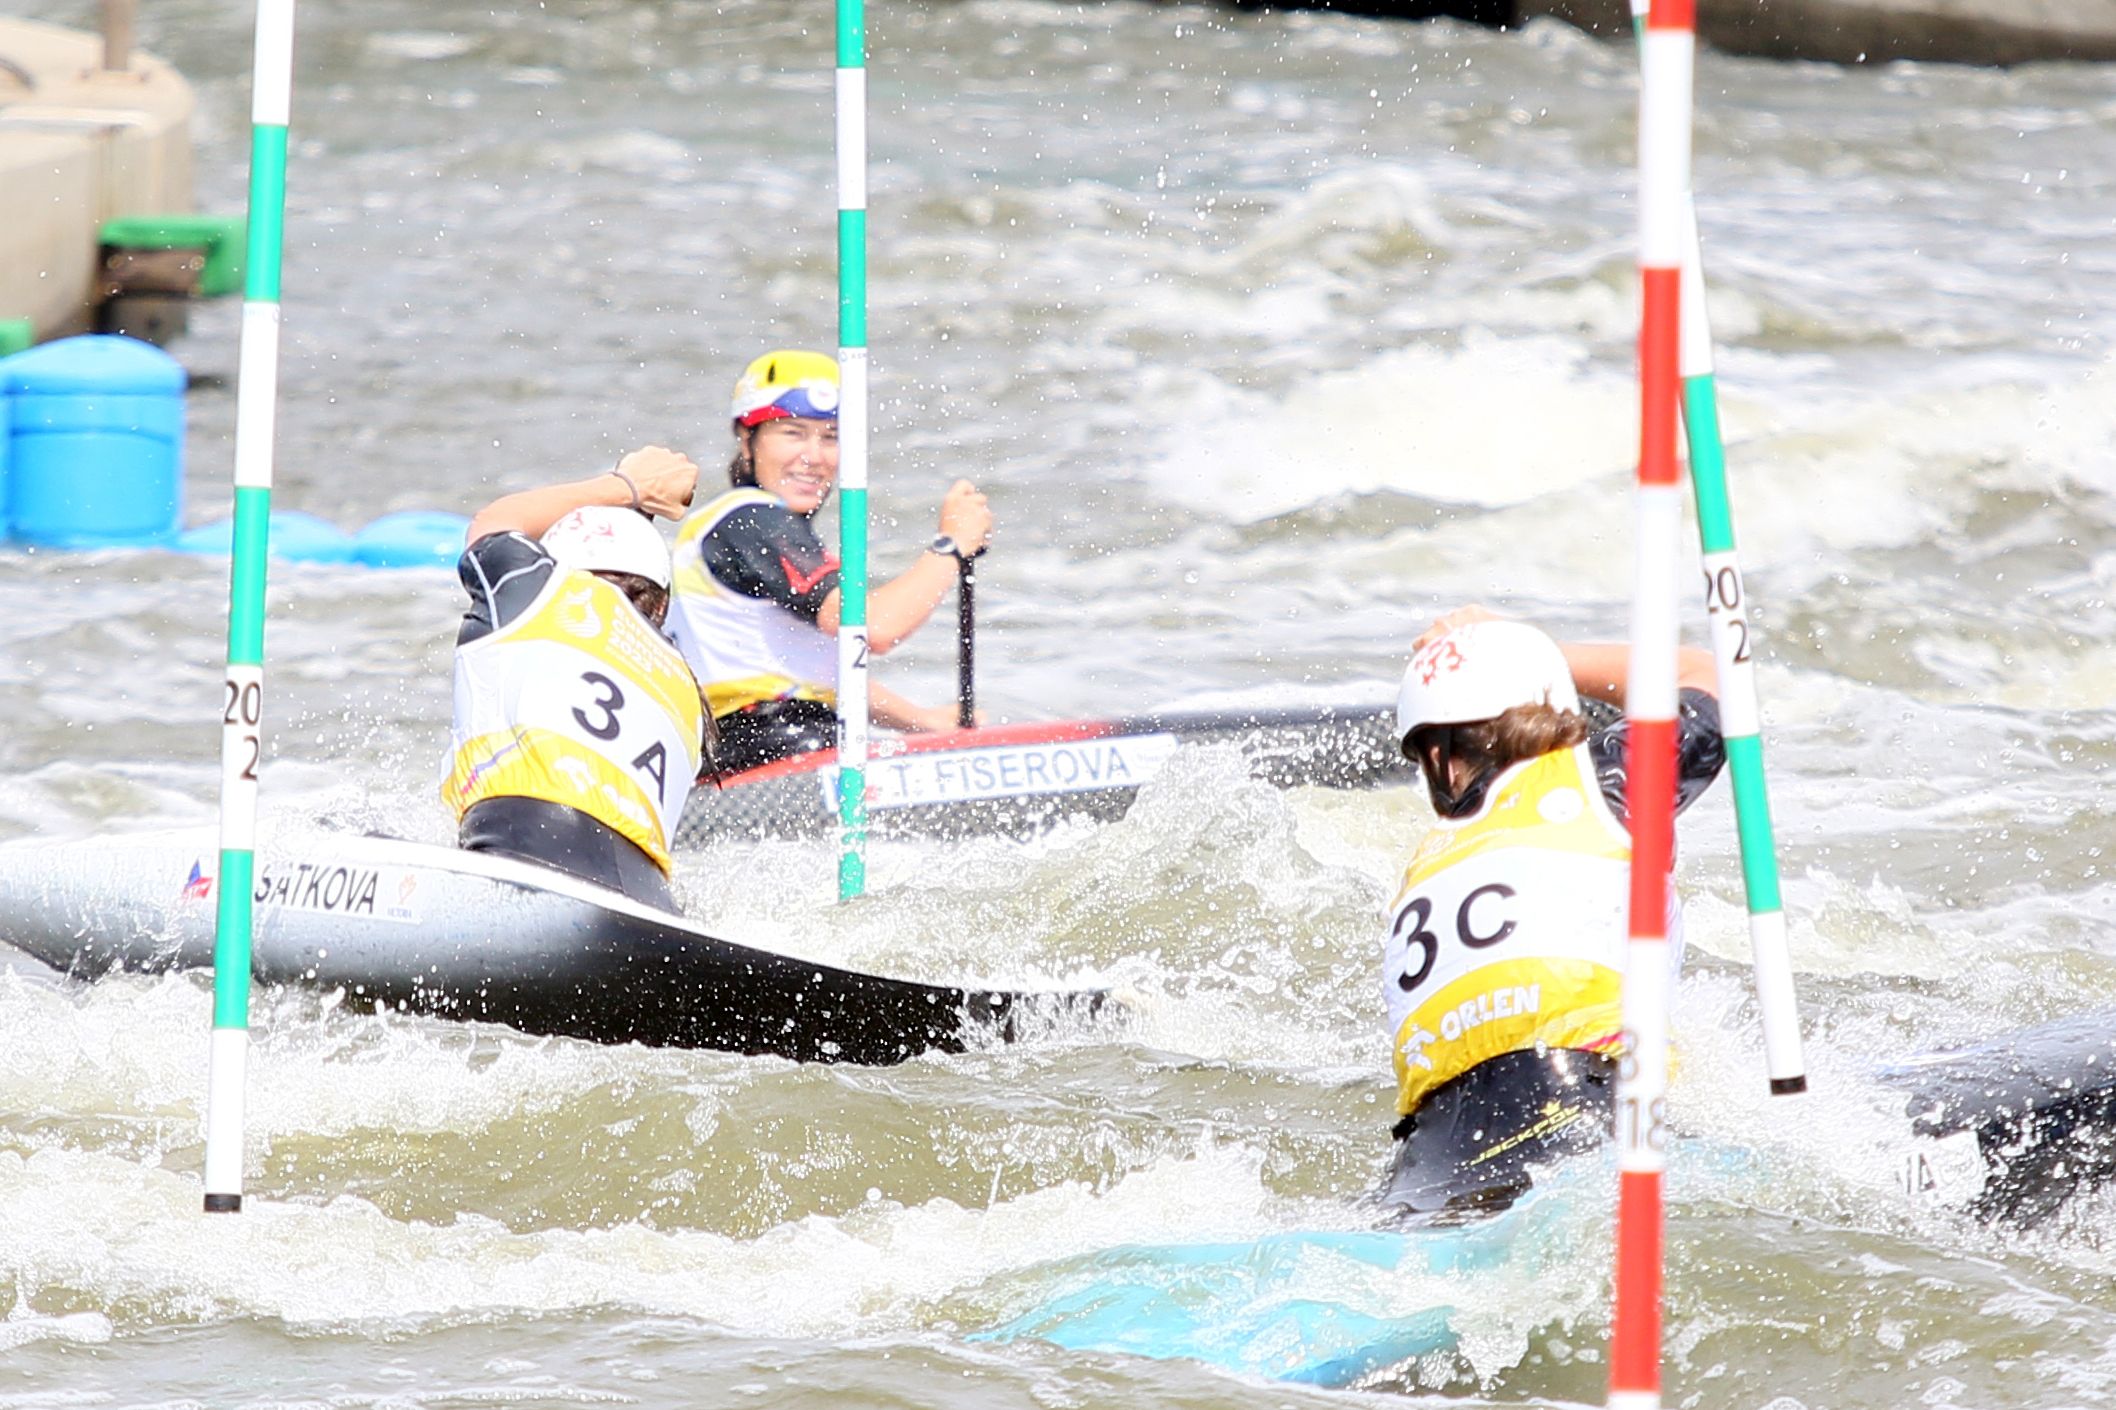 Germany and Czechia canoe slalom team gold medallists